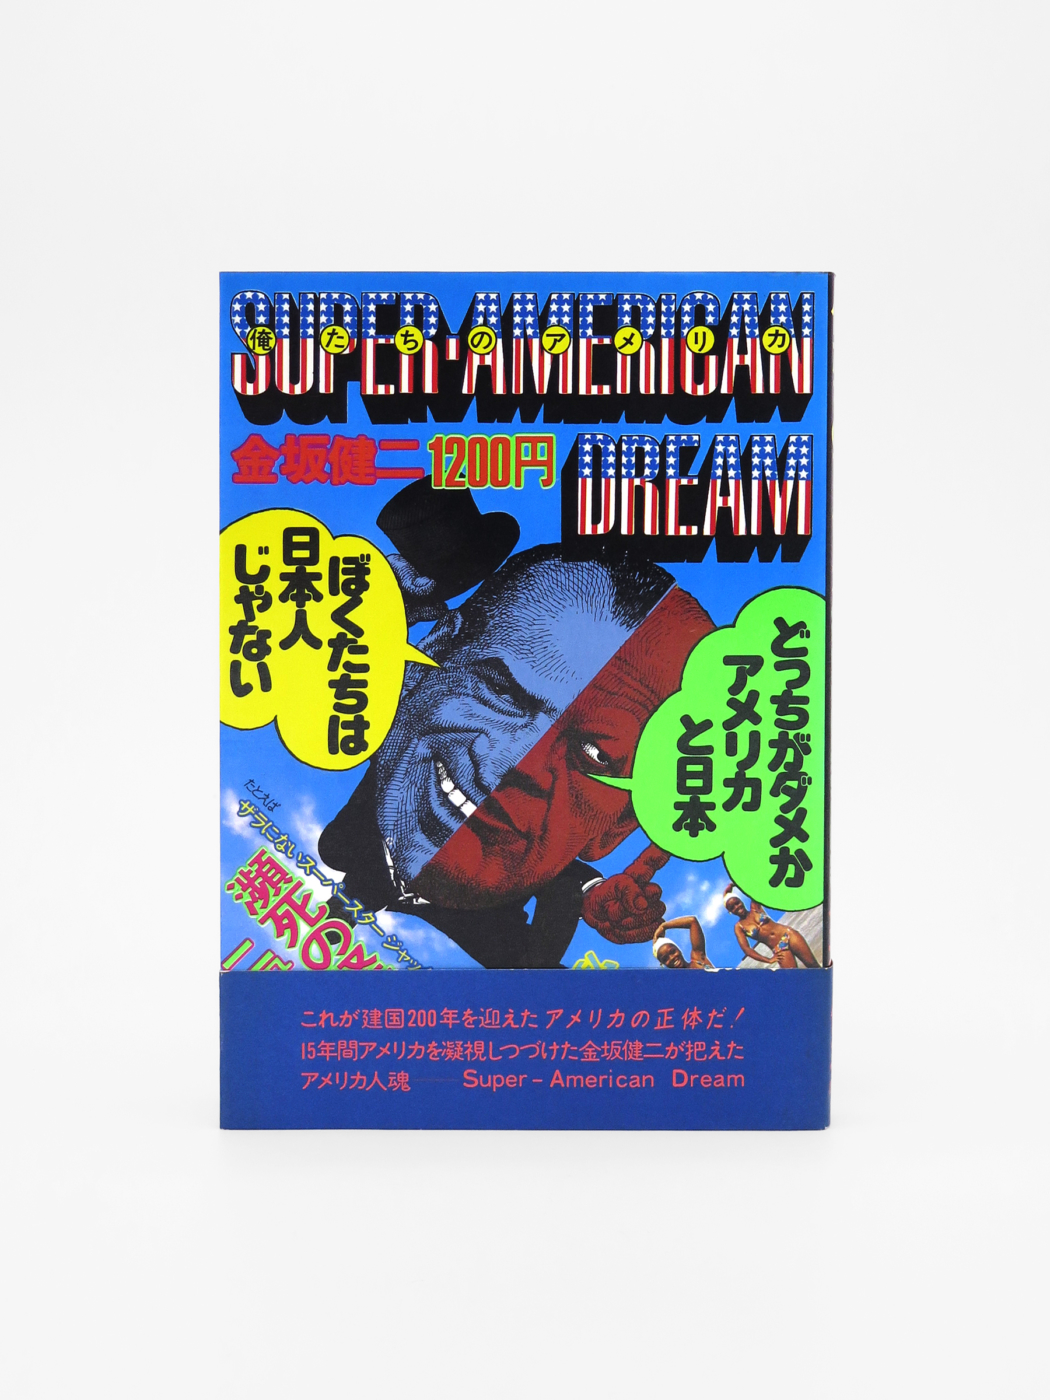 Kenji Kanesaka, Super-American Dream